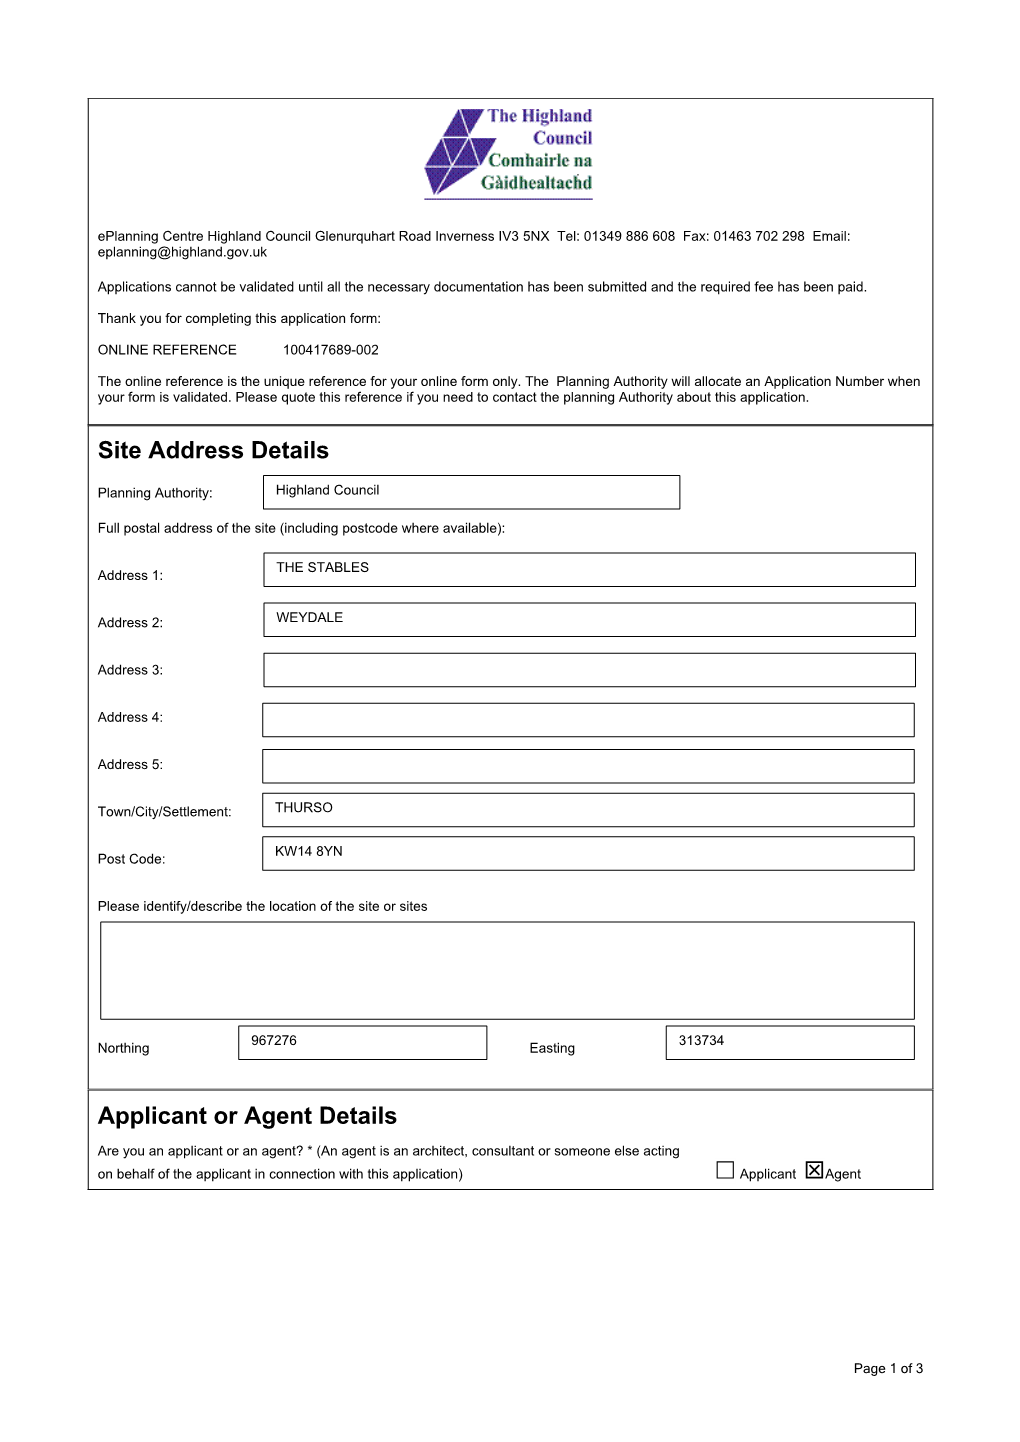 Site Address Details Applicant Or Agent Details